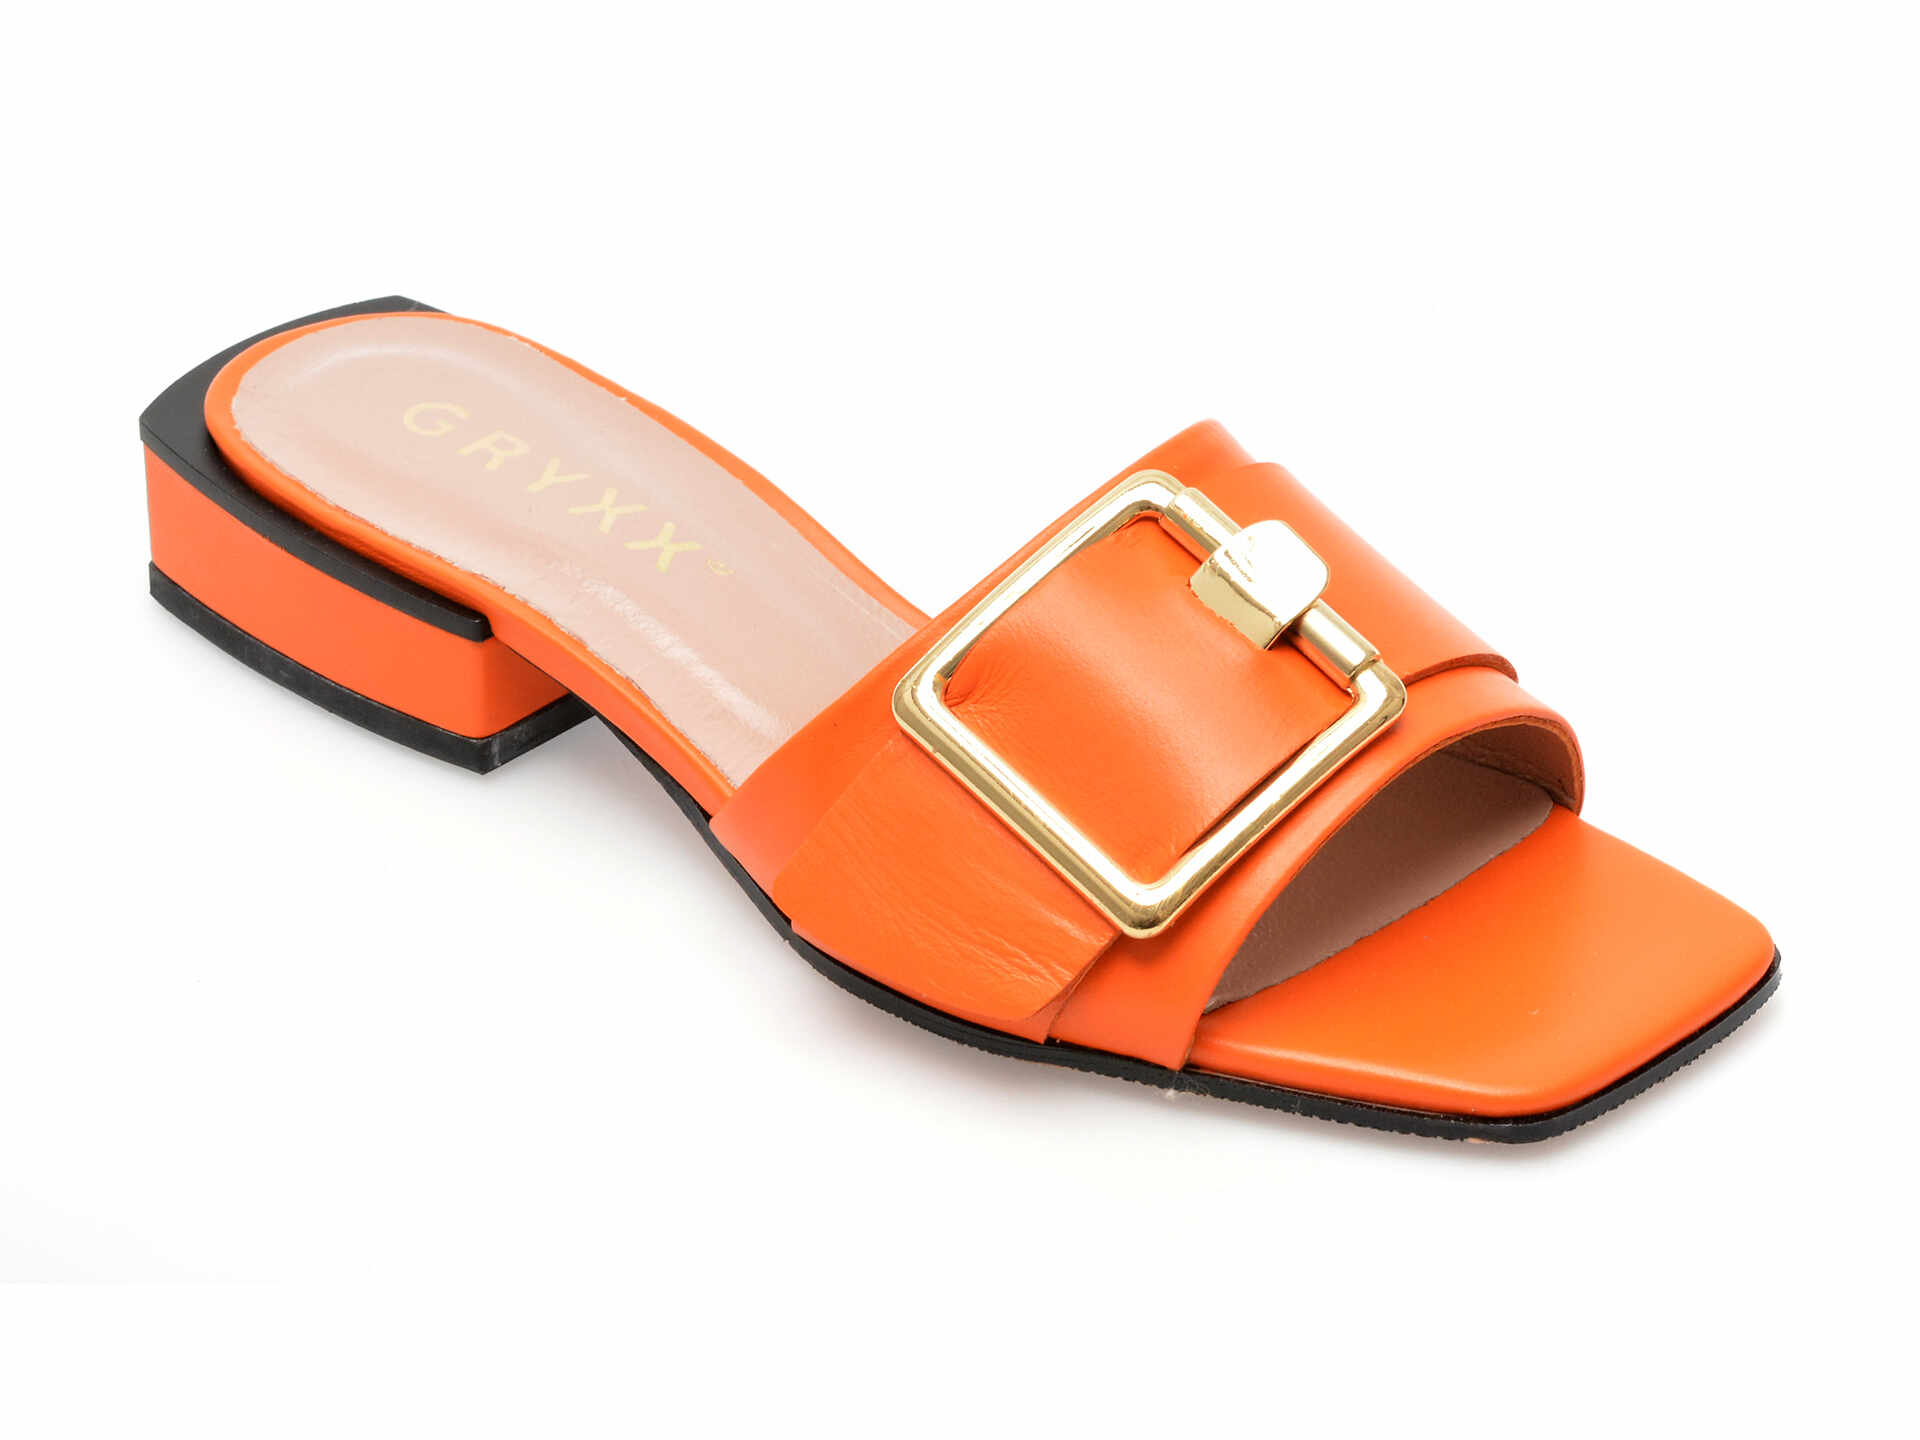 Papuci GRYXX portocalii, 924, din piele naturala